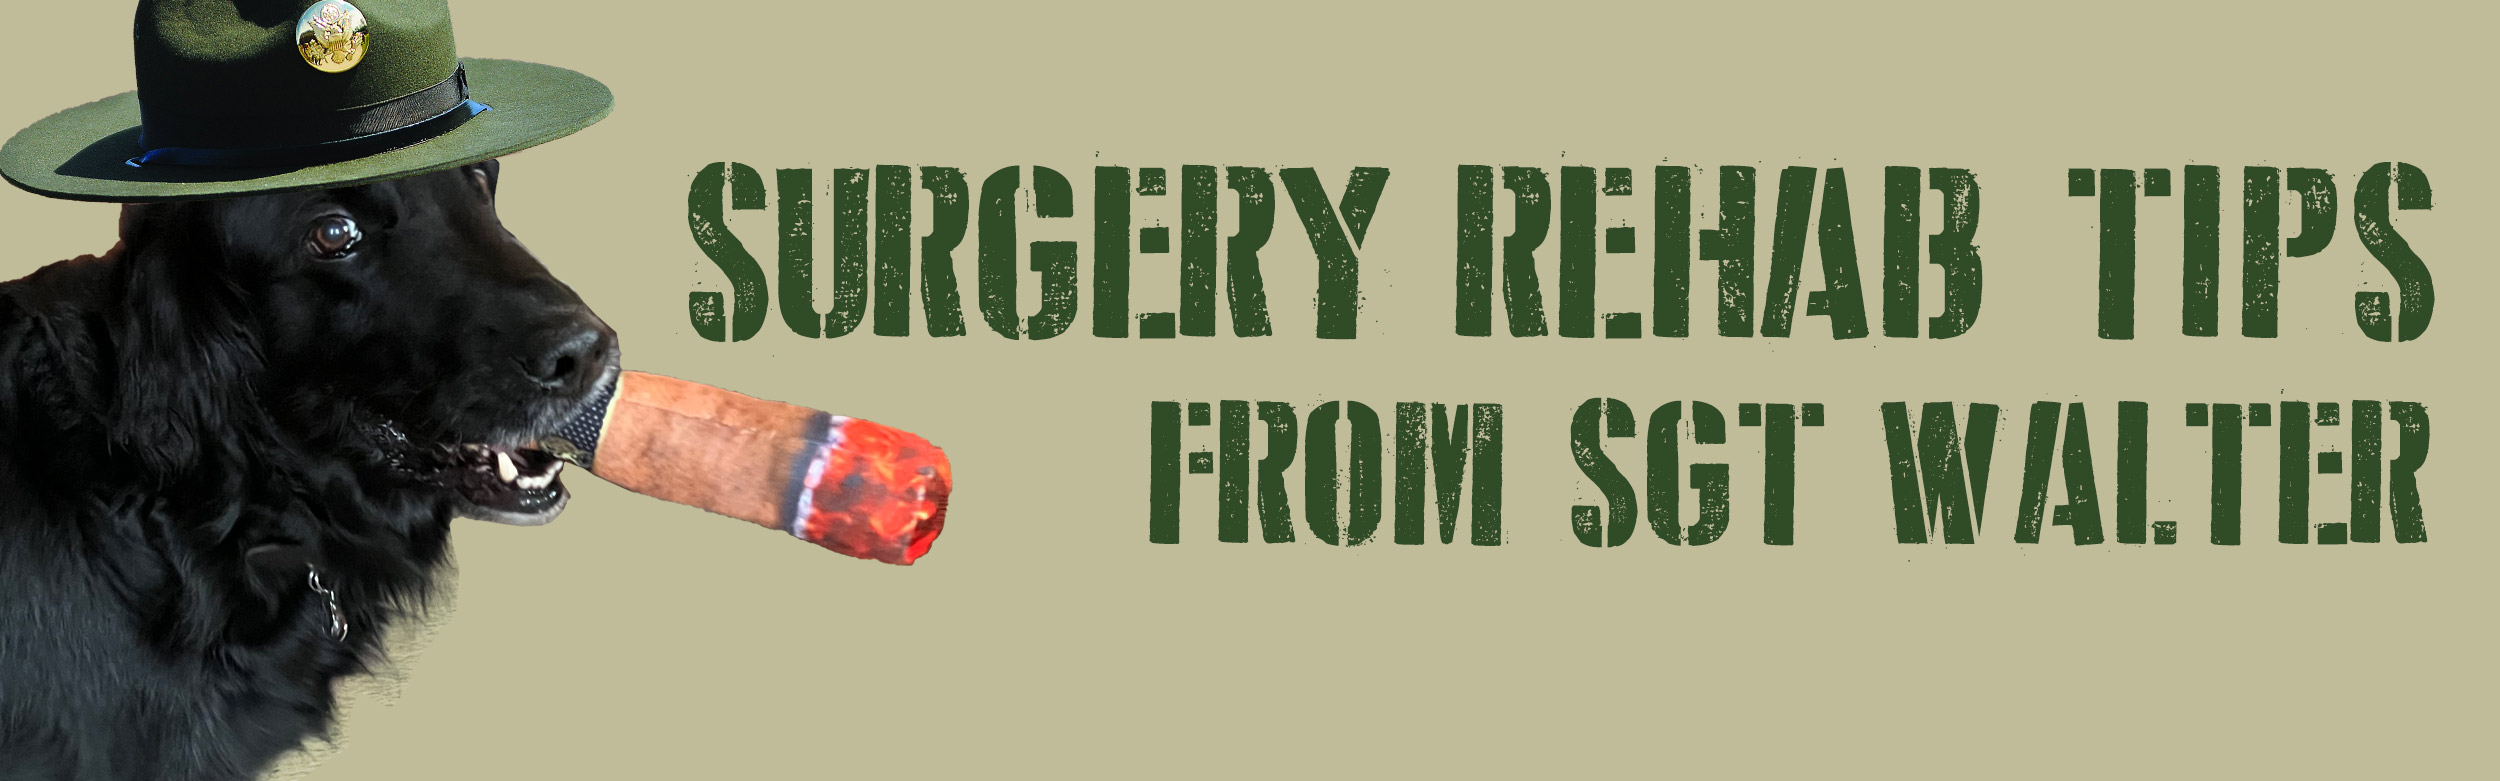 Sergeant Walter's Surgery Rehab Tips